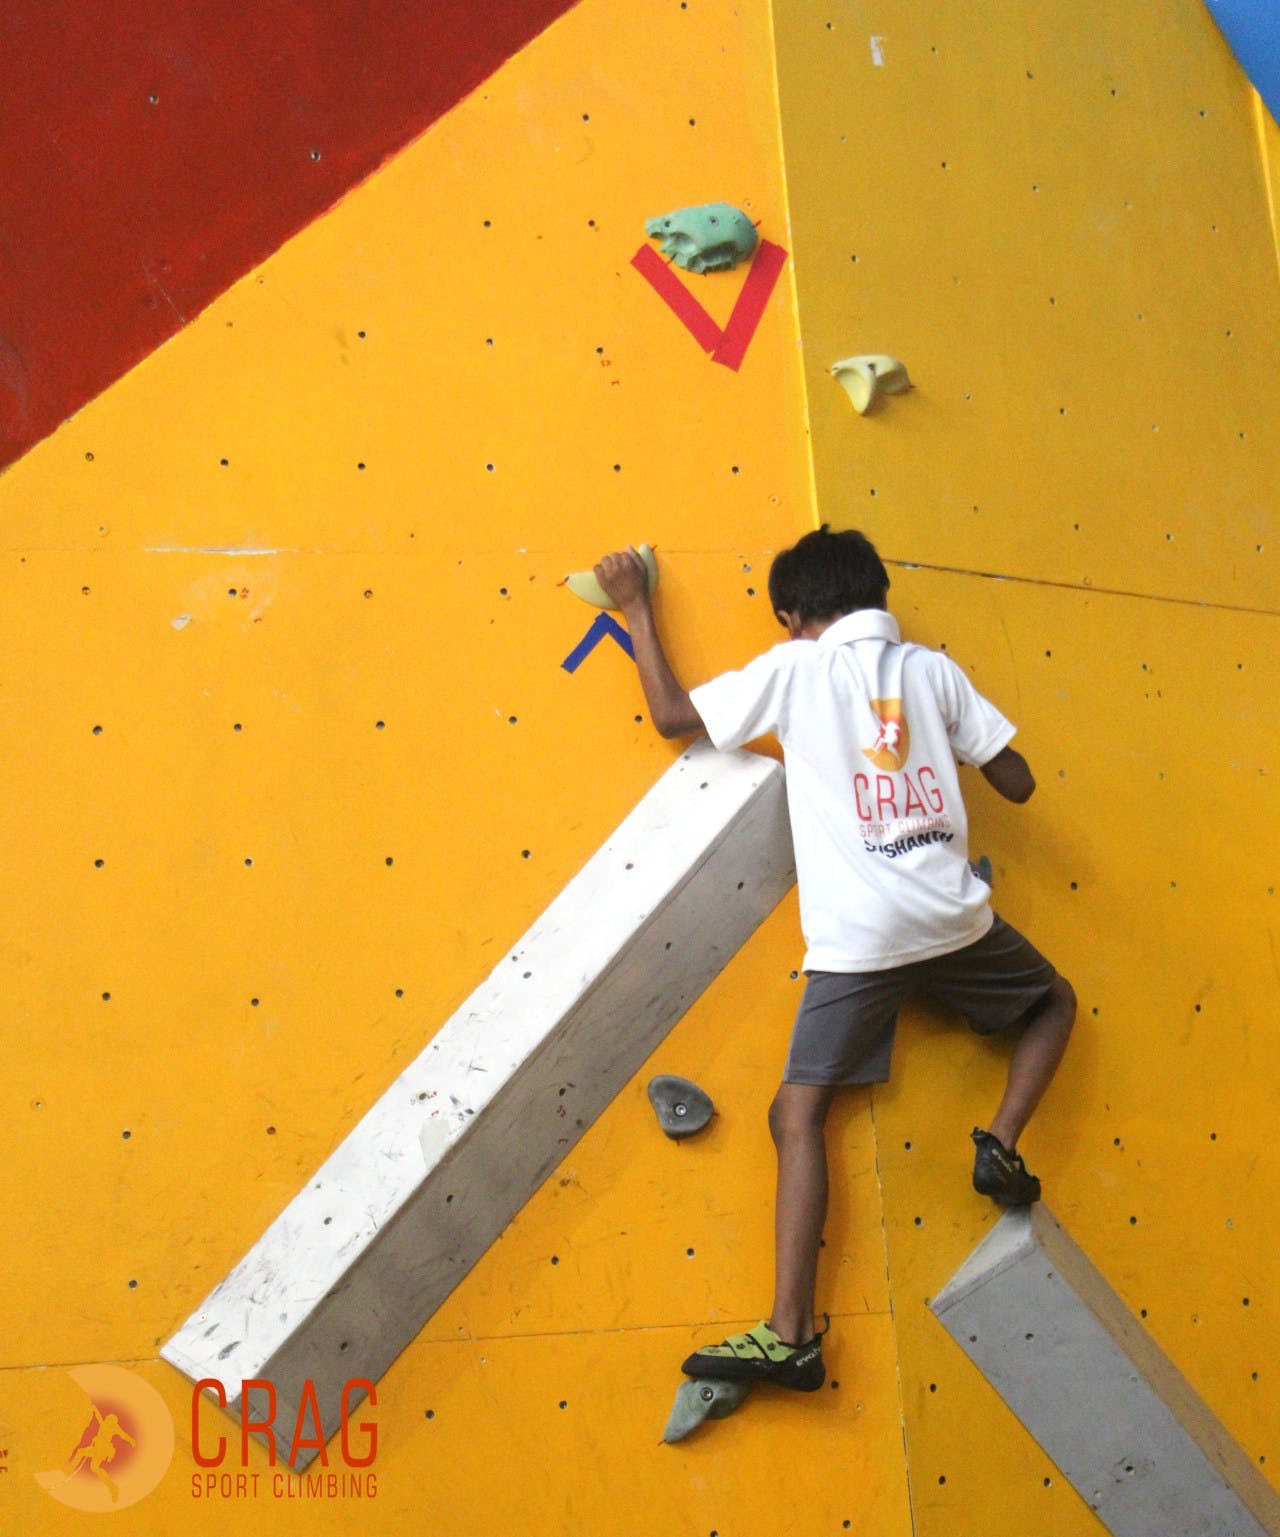 Climbing hold,Climbing,Sport climbing,Bouldering,Rock climbing,Adventure,Yellow,Wall,Recreation,Climbing shoe